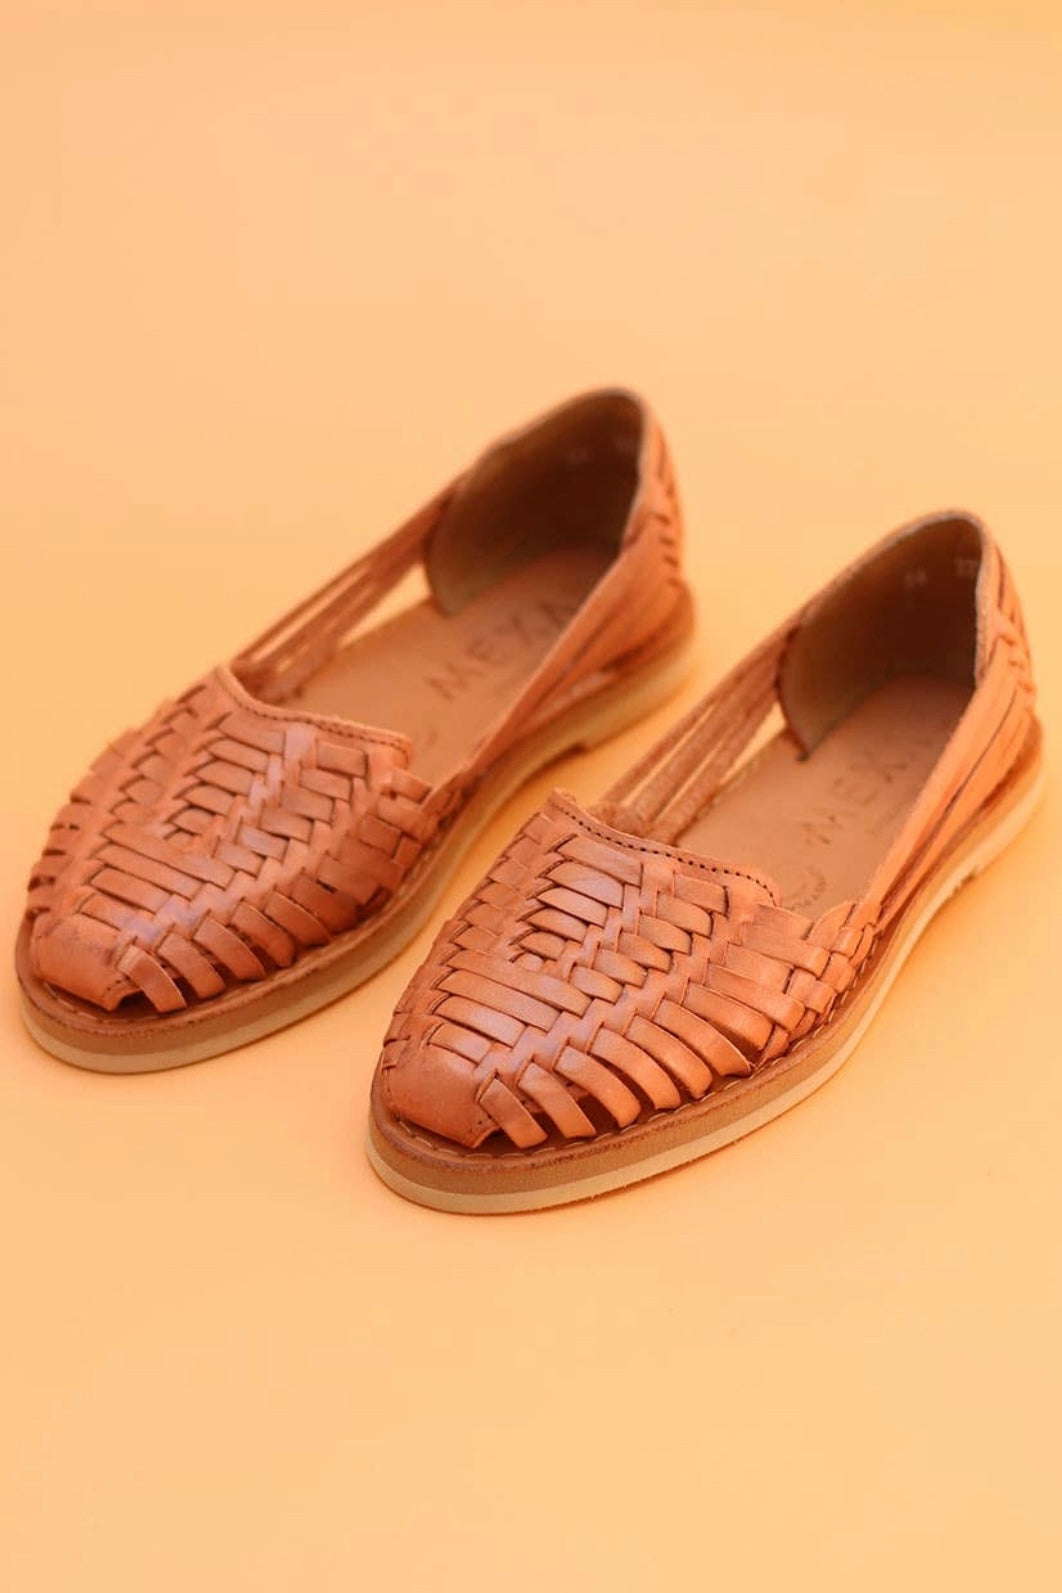 MEXAS Guerita Leather Sandals